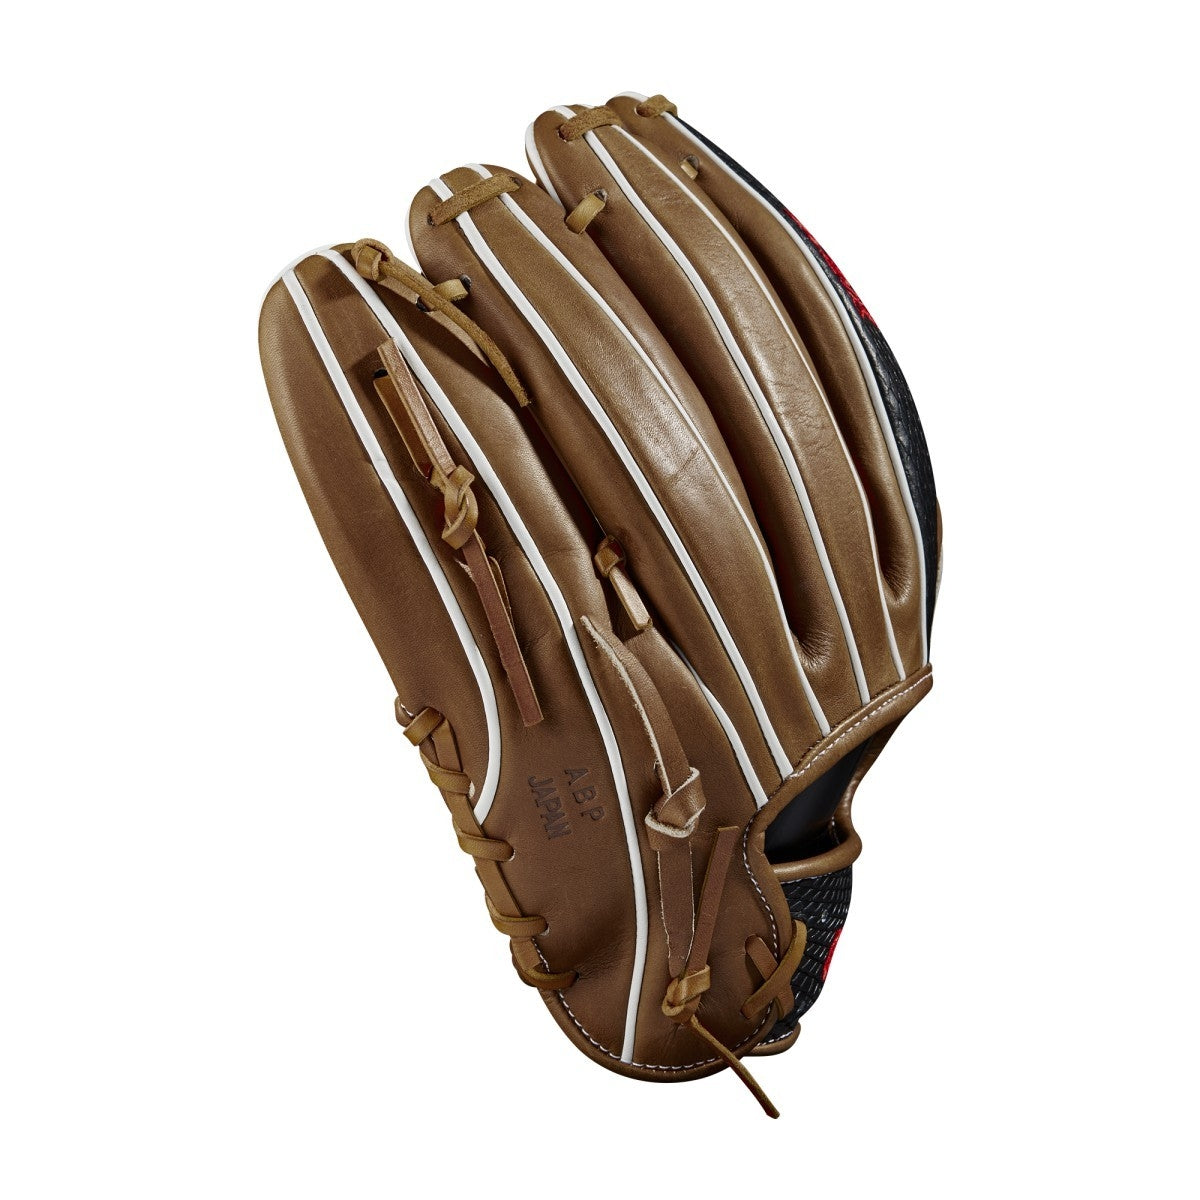 Wilson A2K 1787 11.75" Infielder's Glove